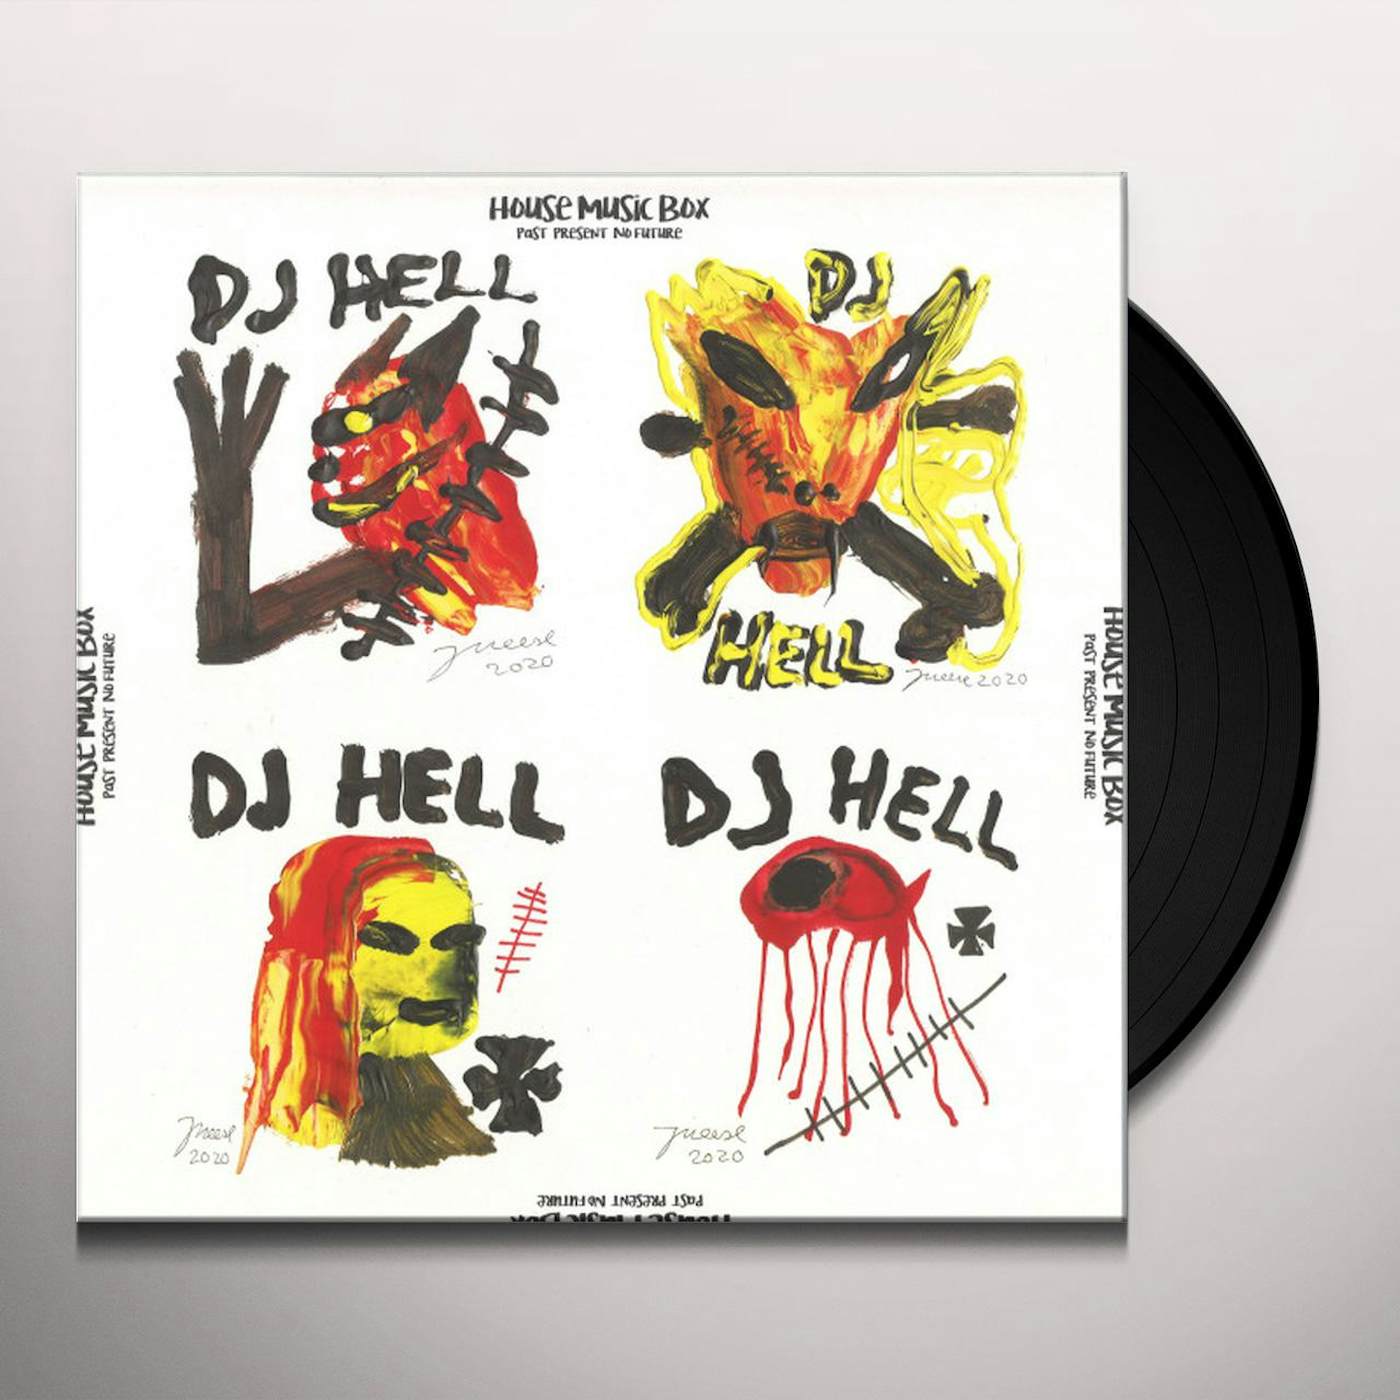 DJ Hell HOUSE MUSIC BOX (PAST, PRESENT, NO FUTURE) (Vinyl)